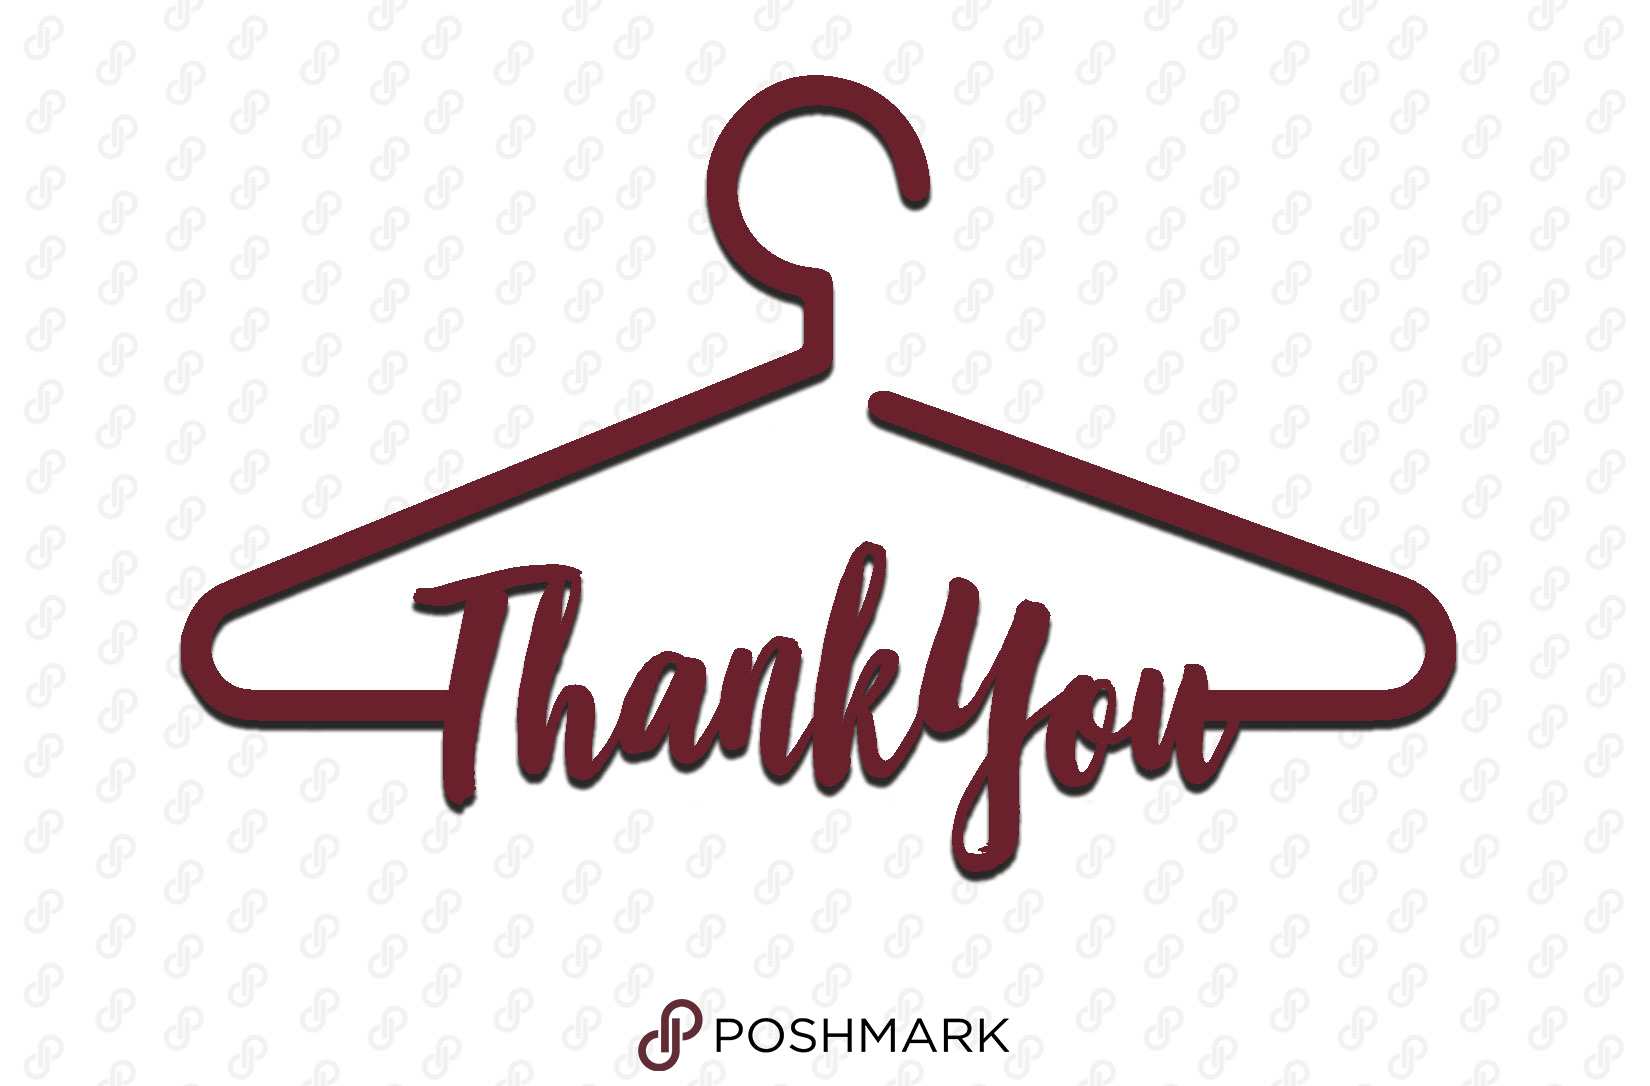 Poshmark Logo - Contest Alert: Design the Next Poshmark Thank You Card